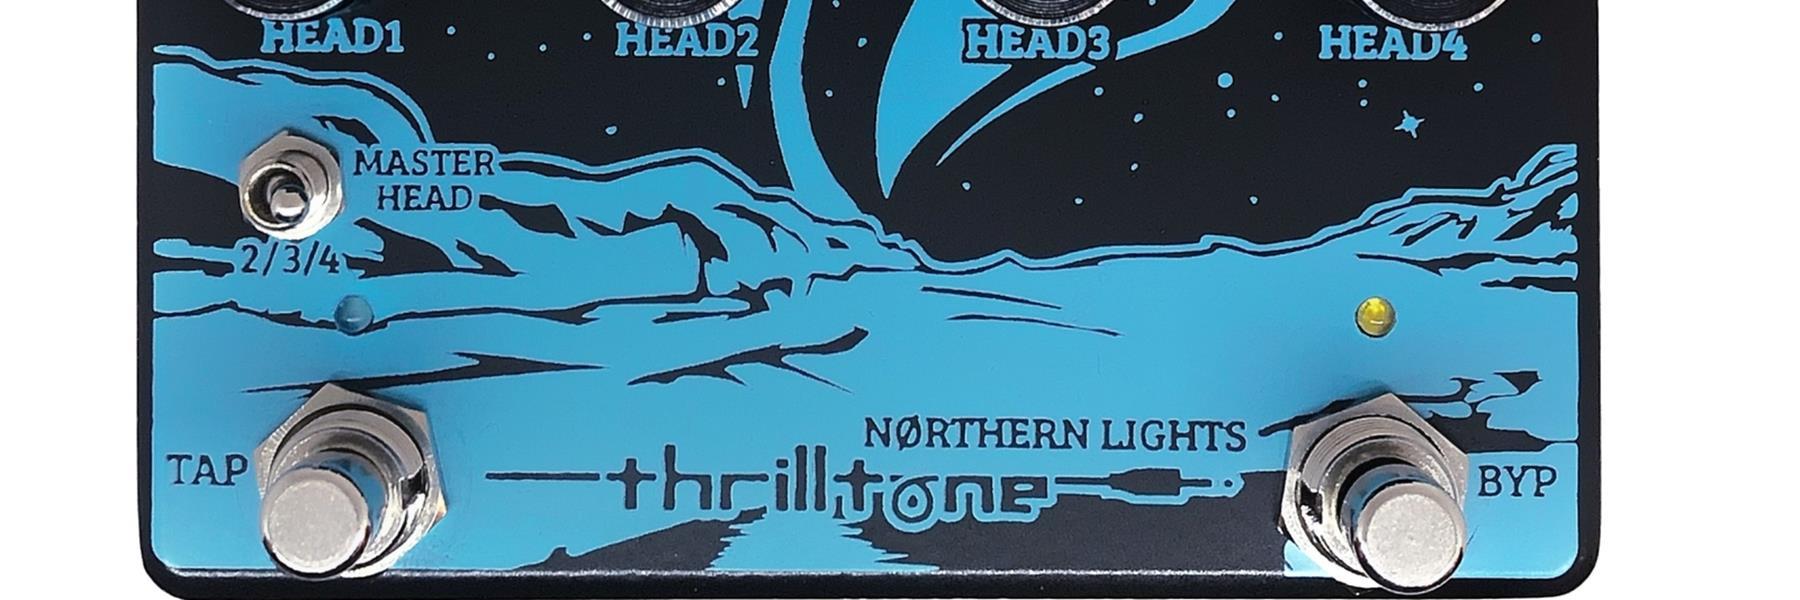 ThrillTone Nothern Lights - Un « chant » magnétique